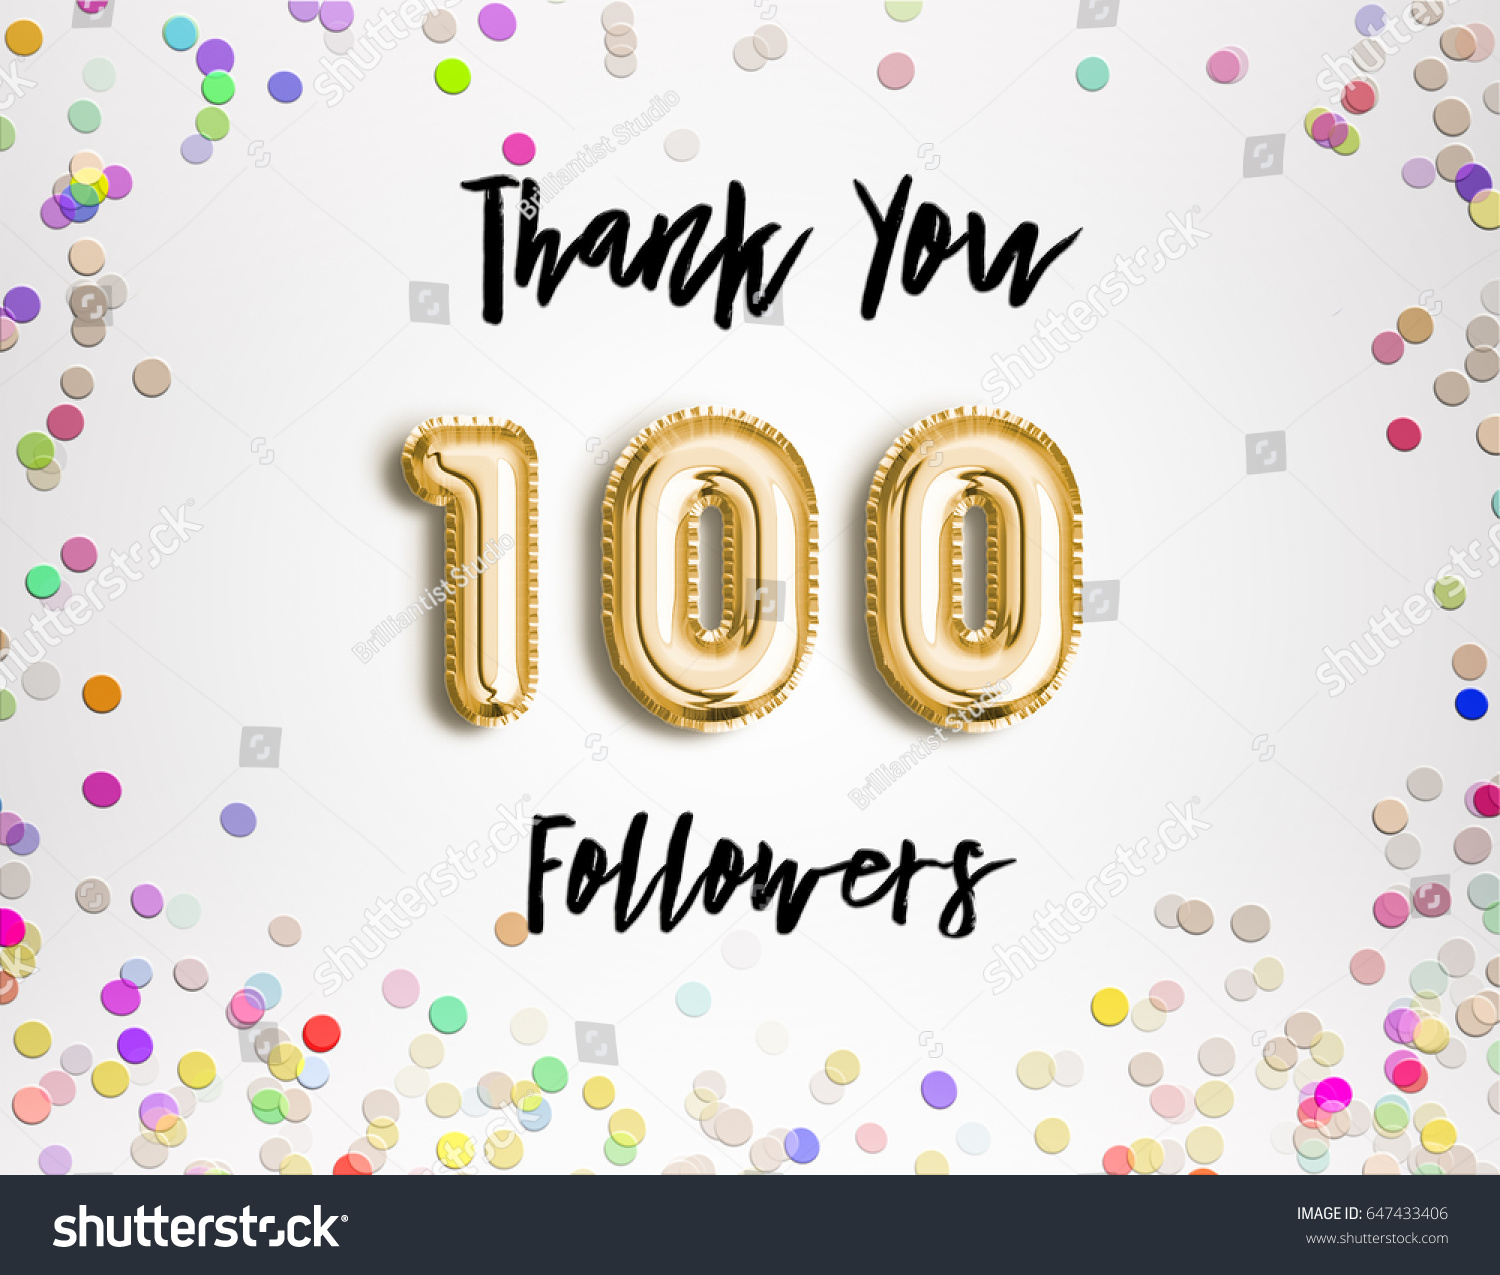 100 One Hundred Thank You Gold Stok İllüstrasyon 647433406 Shutterstock.